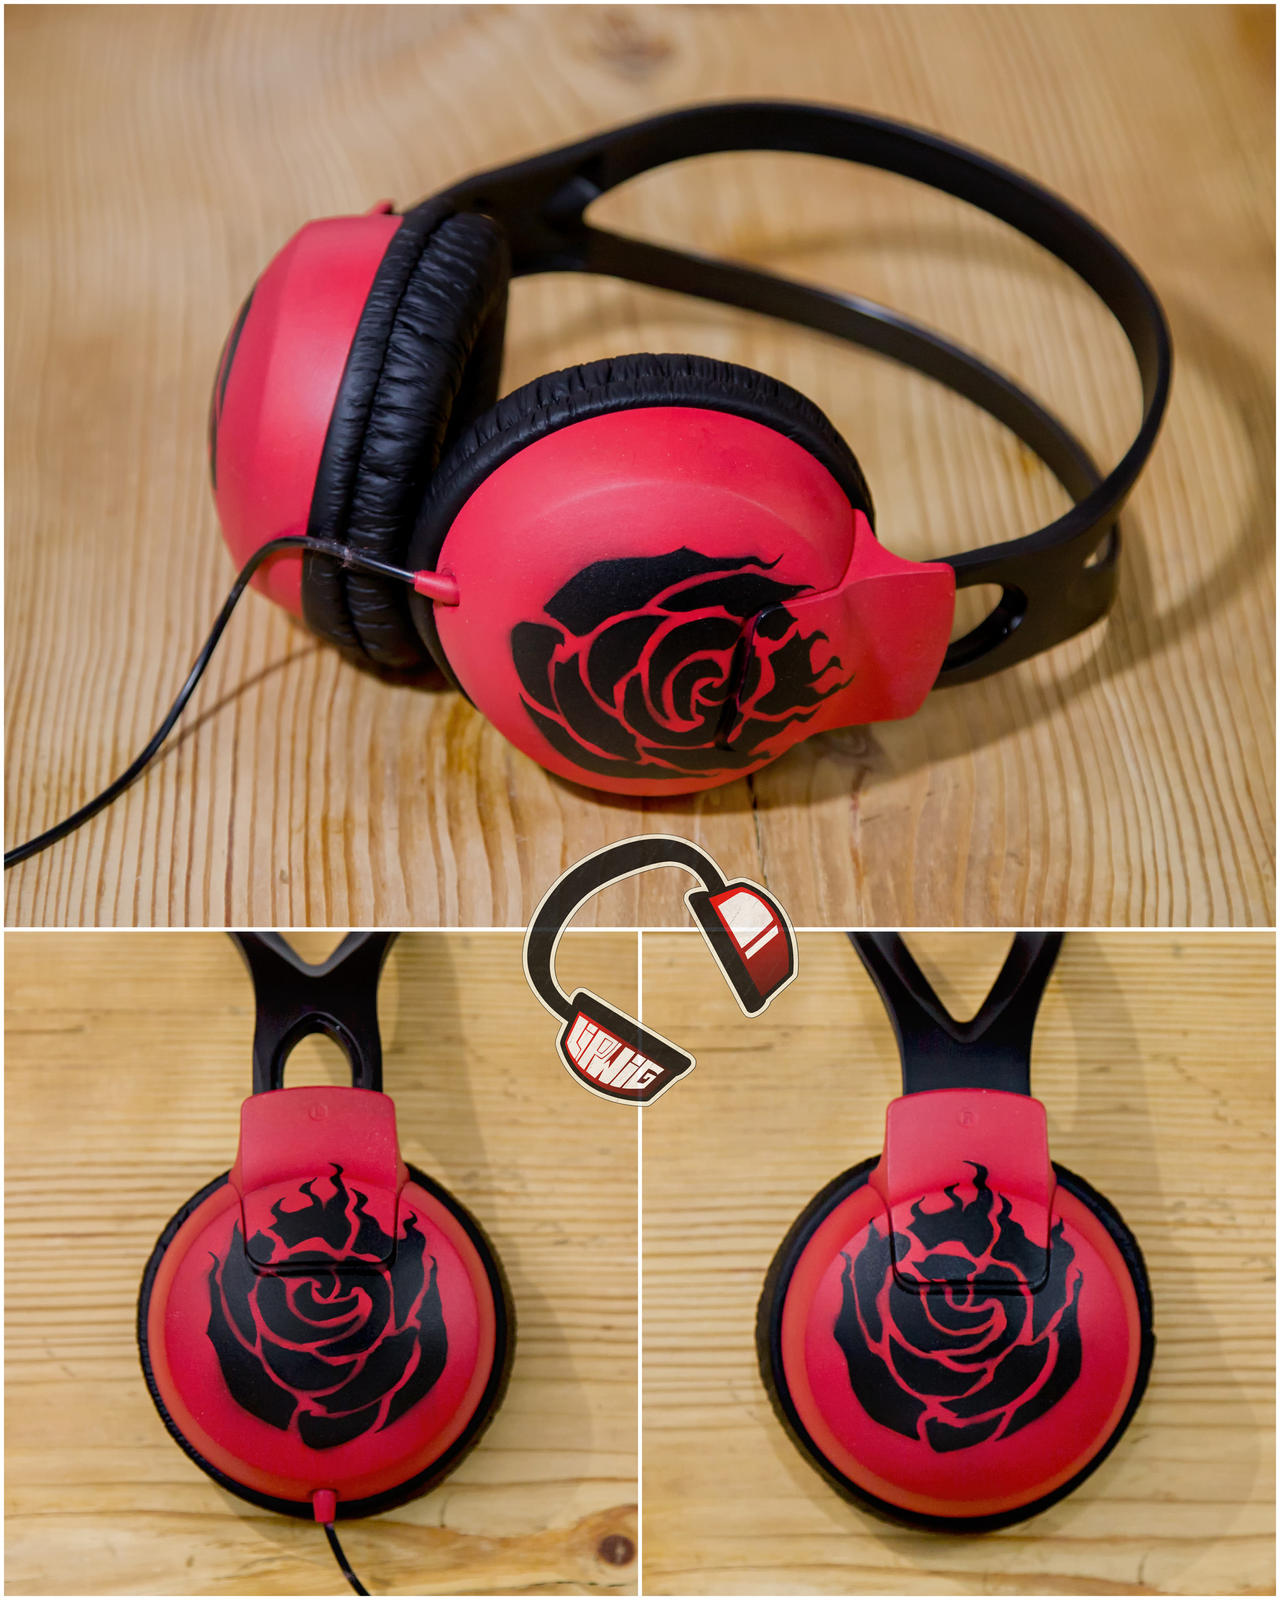 Commission - RWBY Ruby Rose headphones